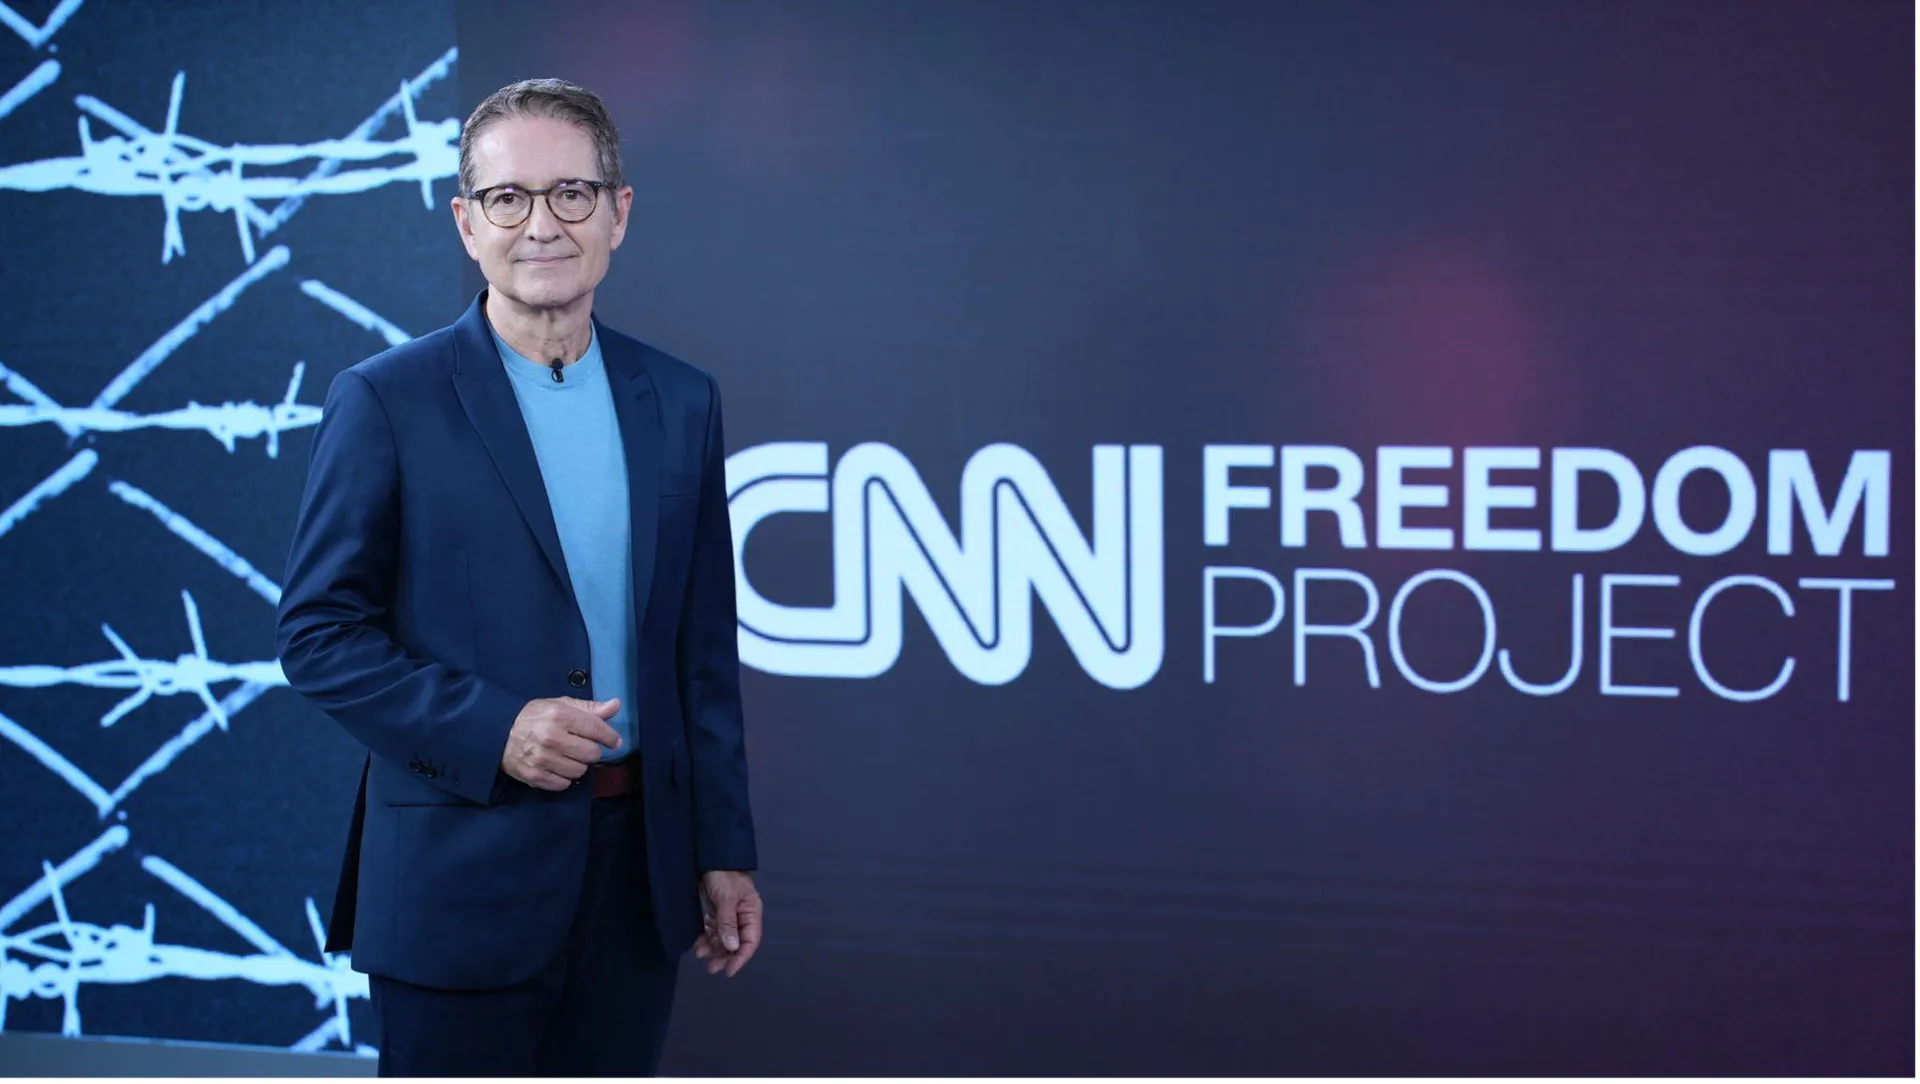 CNN Freedom Project